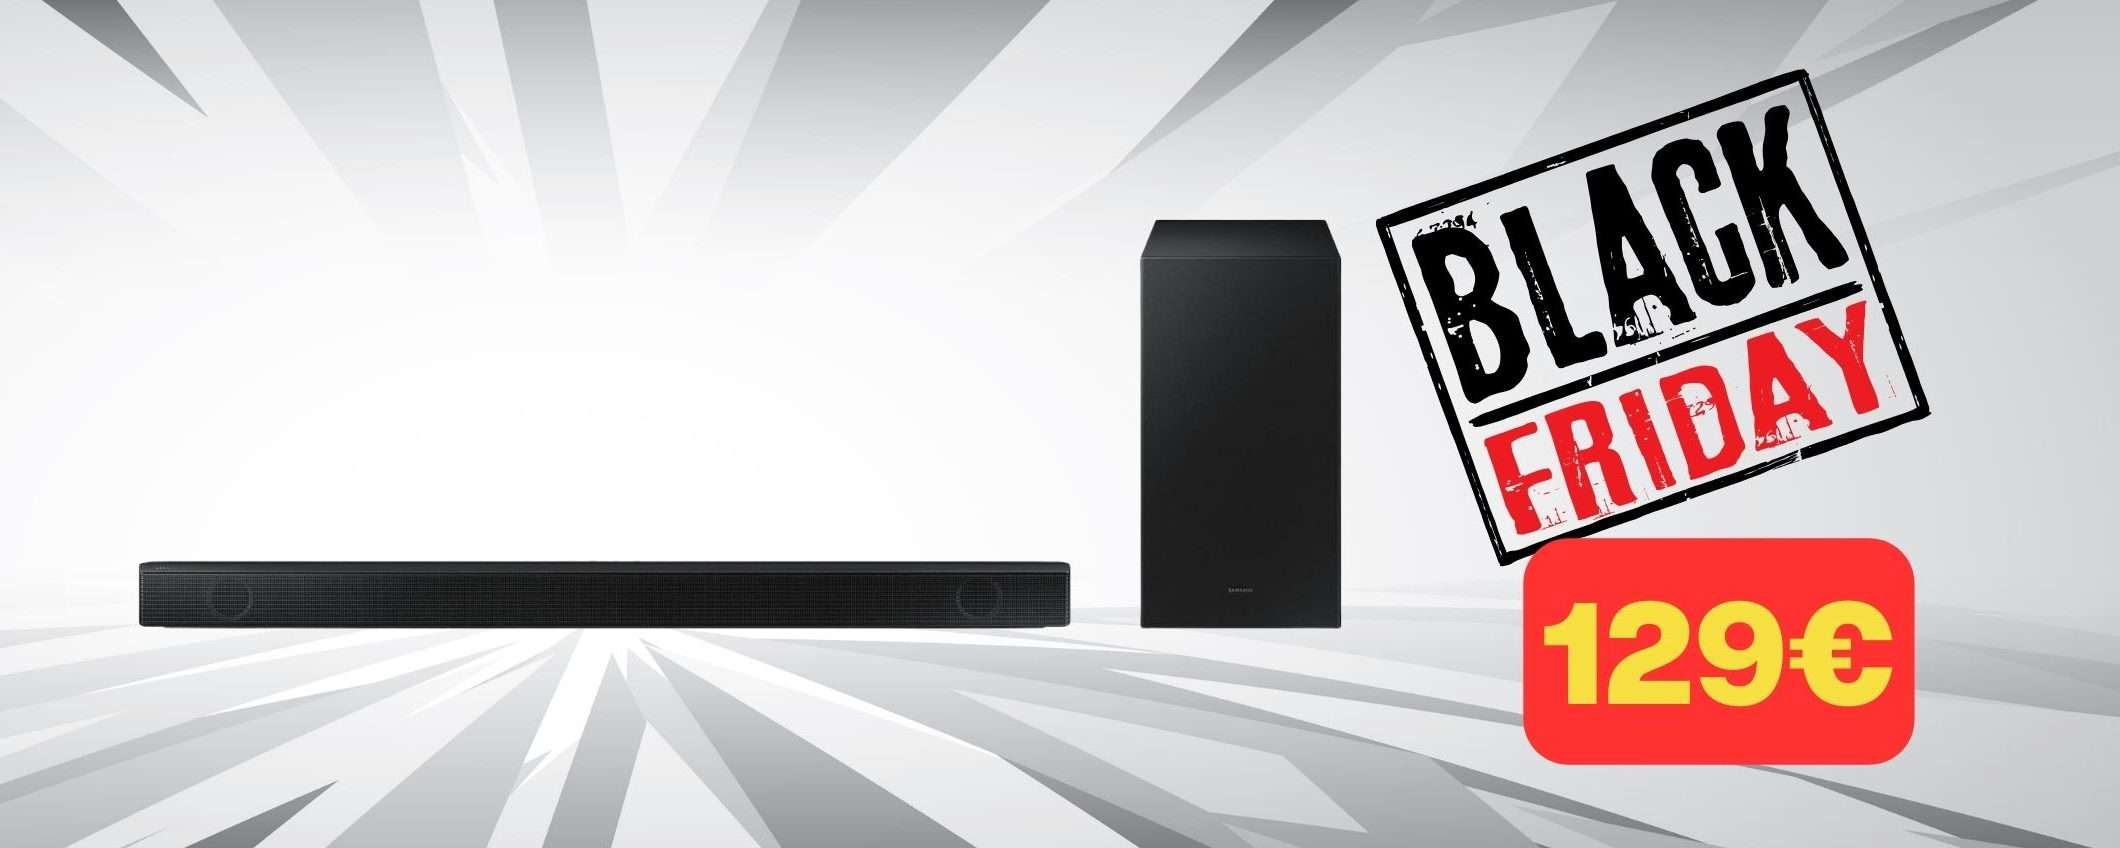 Soundbar Samsung 360W: OCCASIONE BLACK FRIDAY su Amazon (129€)